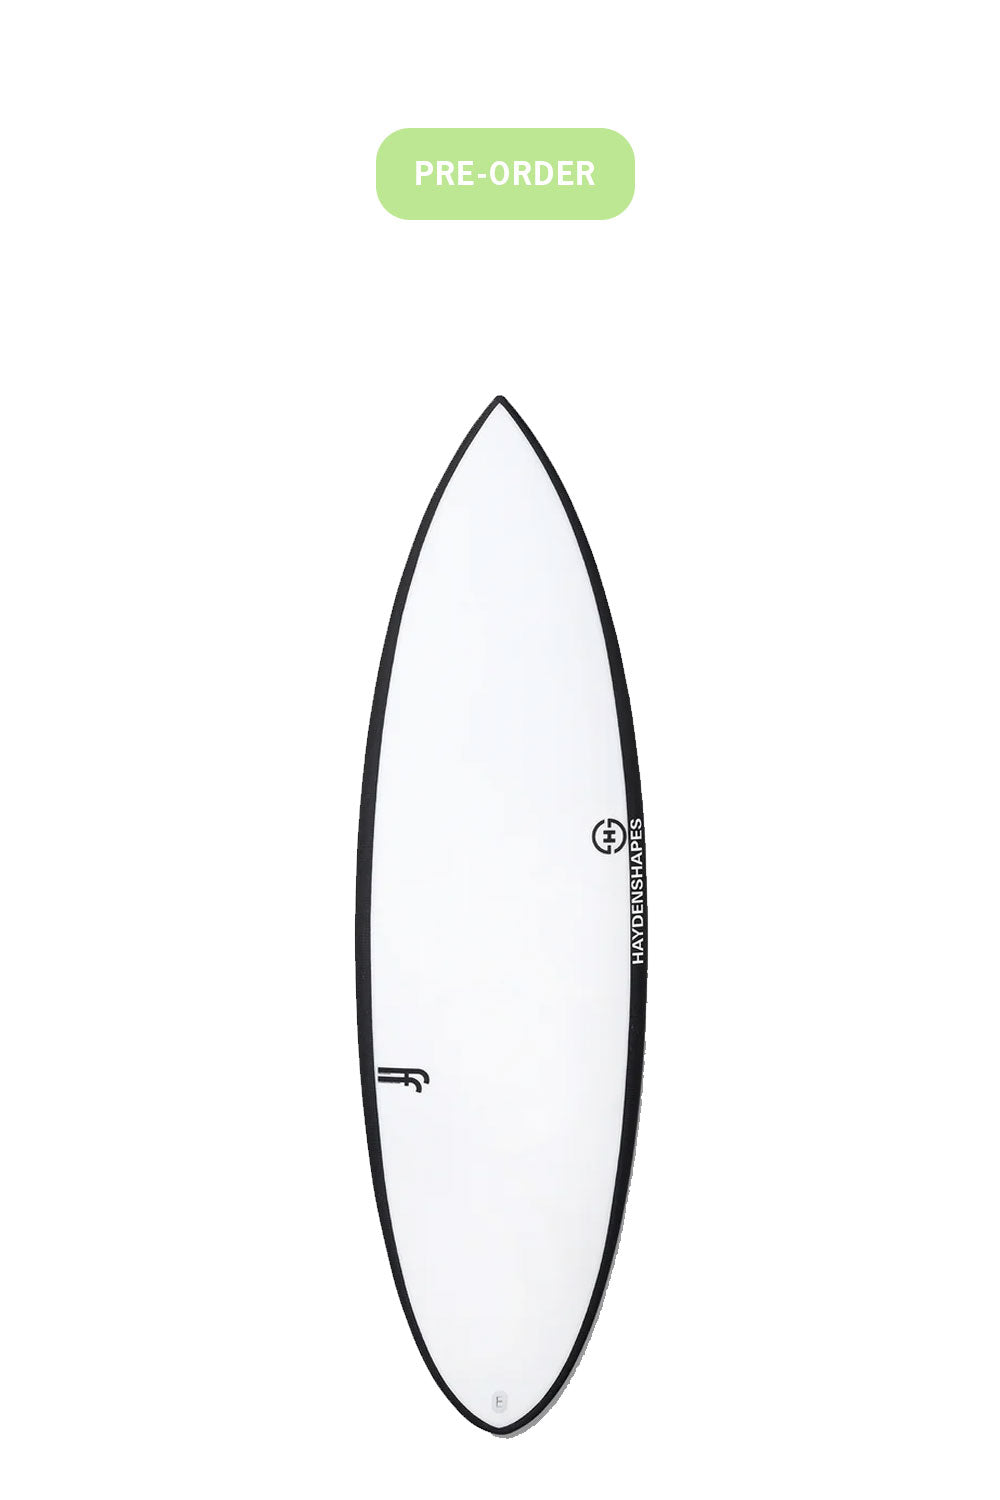 HaydenShapes Surfboard - HOLY HYPTO FF - 5'9